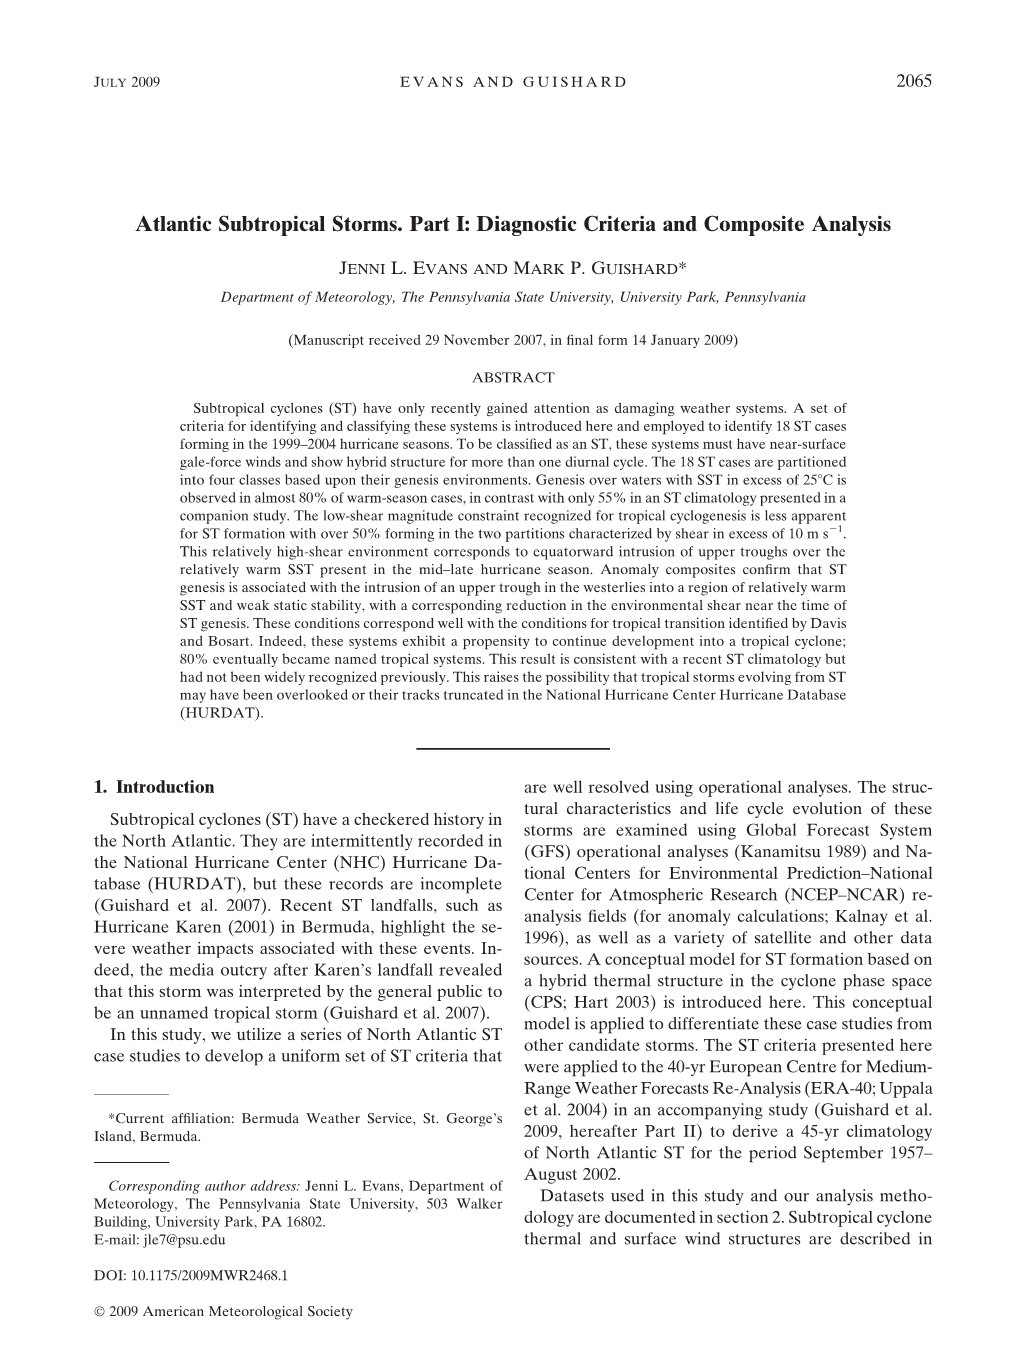 Atlantic Subtropical Storms. Part I: Diagnostic Criteria and Composite Analysis